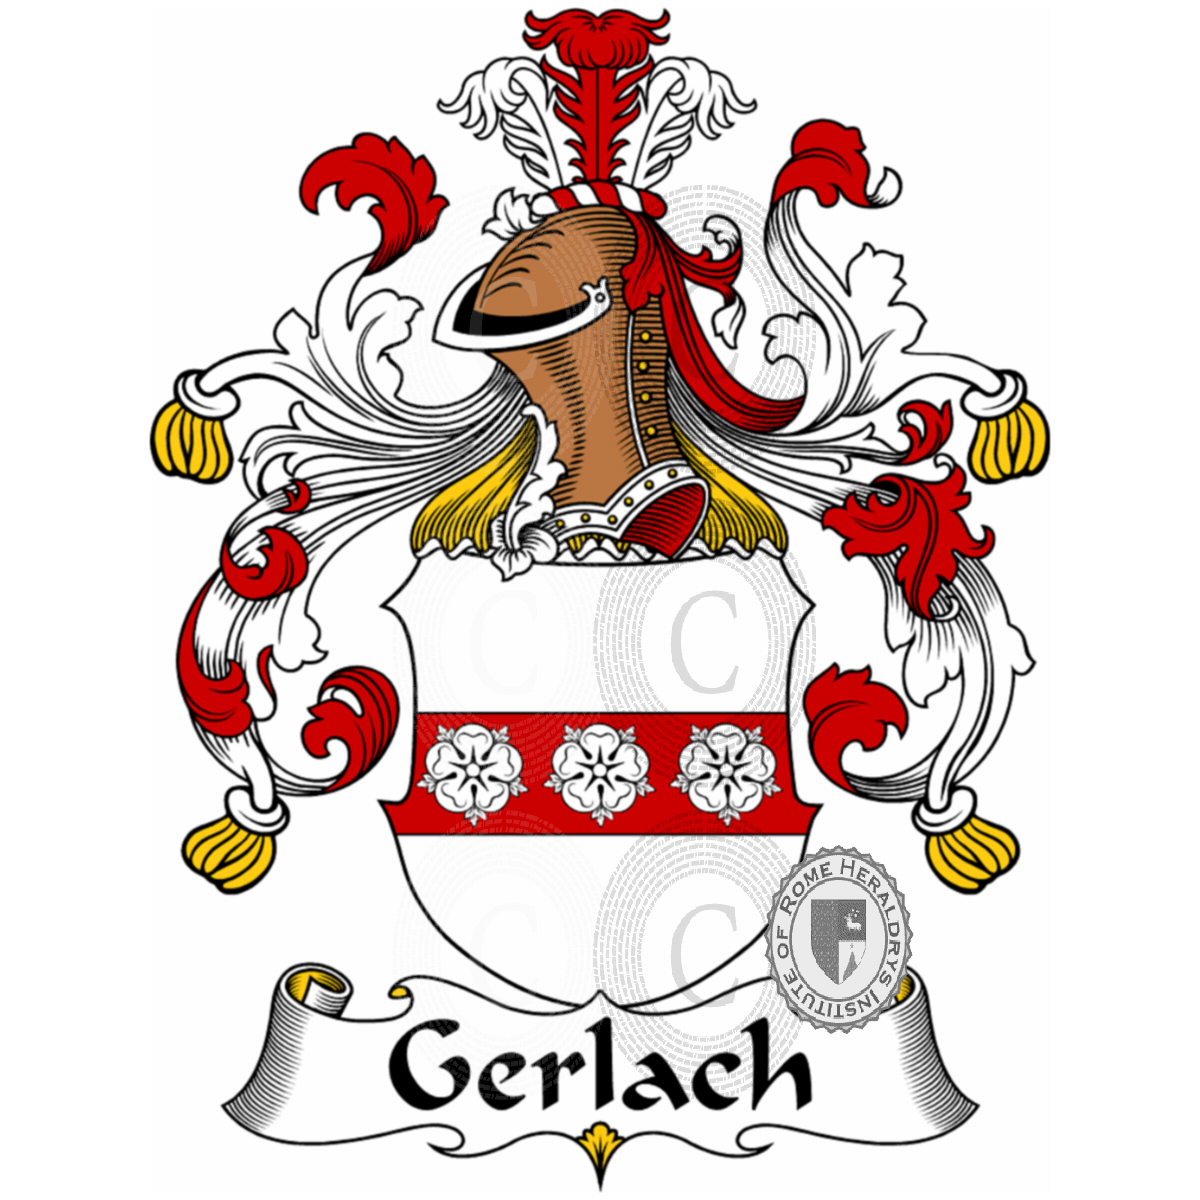 Wappen der FamilieGerlach, Gerlach de Gerlachhein,Gerlaci,Gerlacus